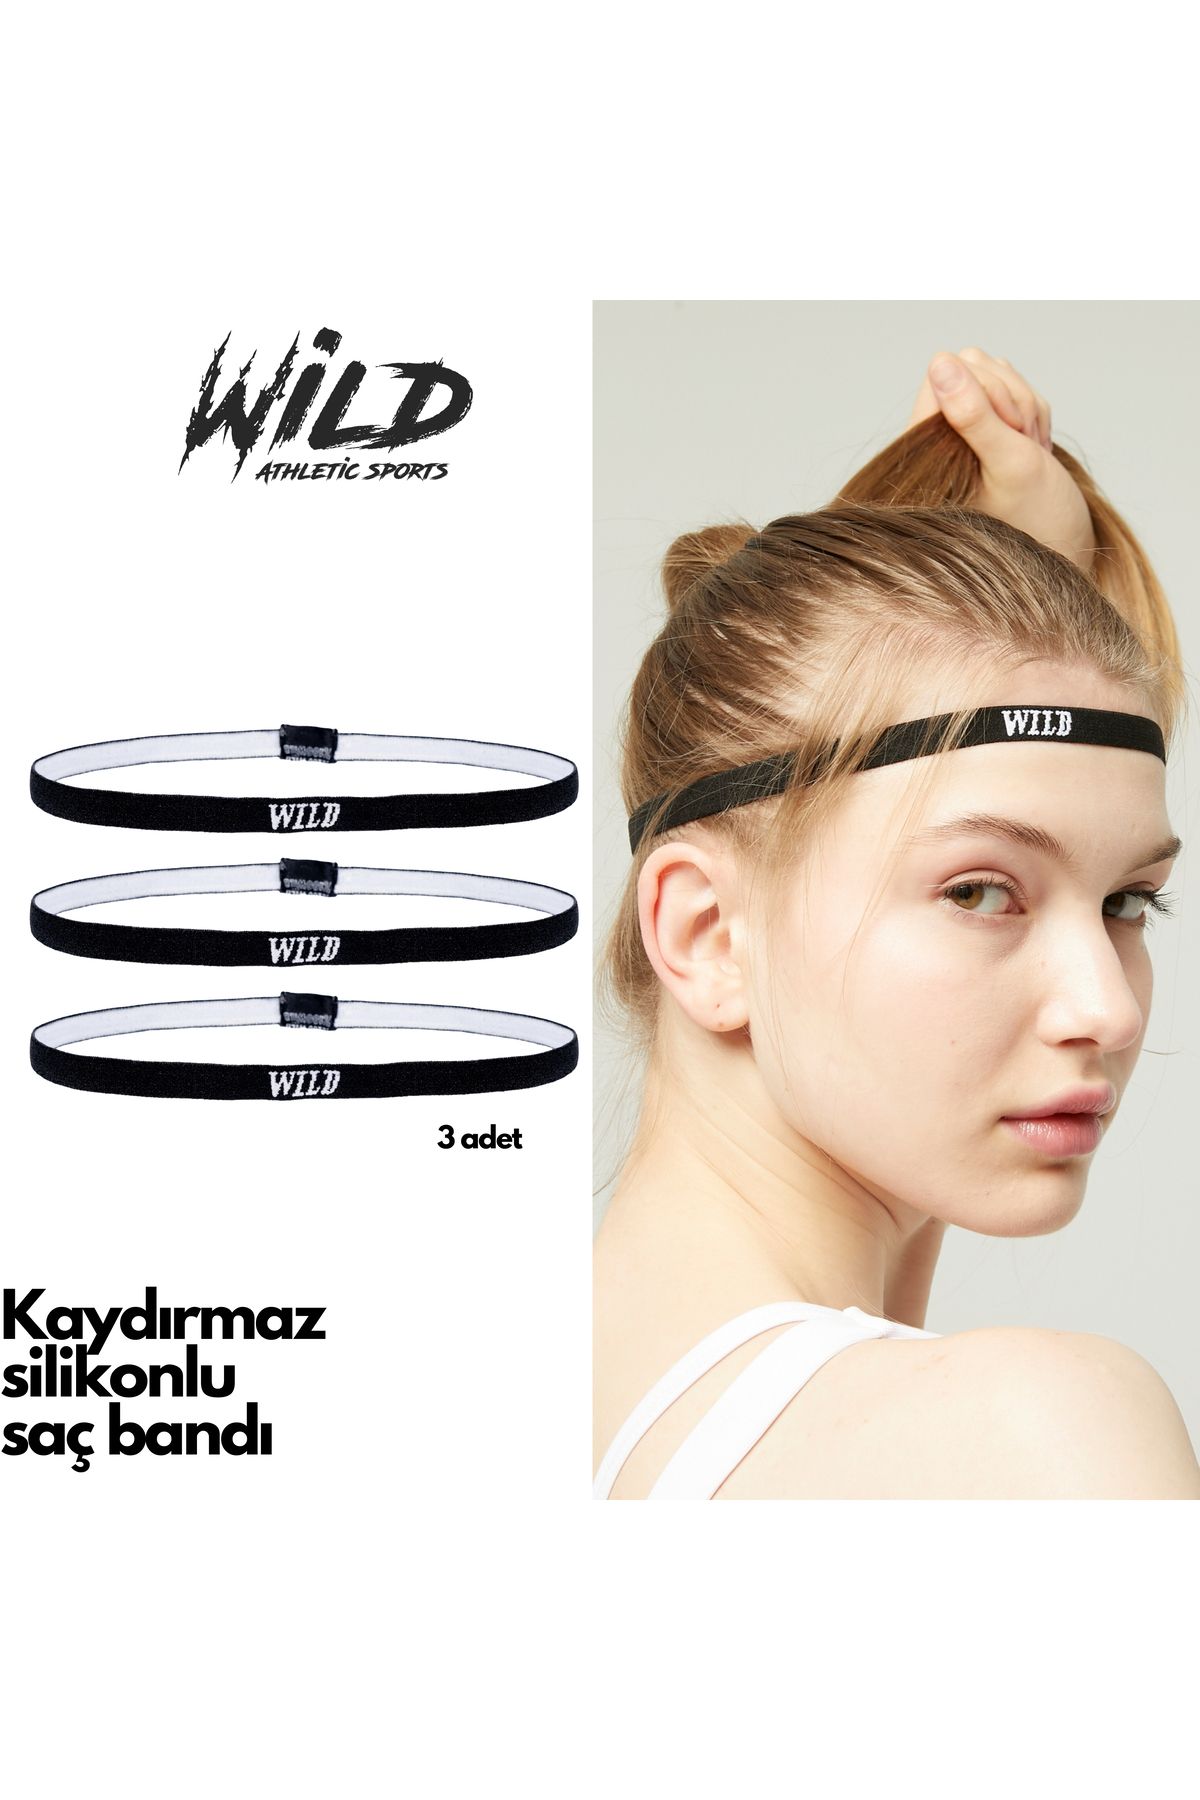 Wild Athletic Sports Fonksiyonel Spor Saç Bandı Kaydırmaz Saç Tokası Tekli WildFlex 1.0